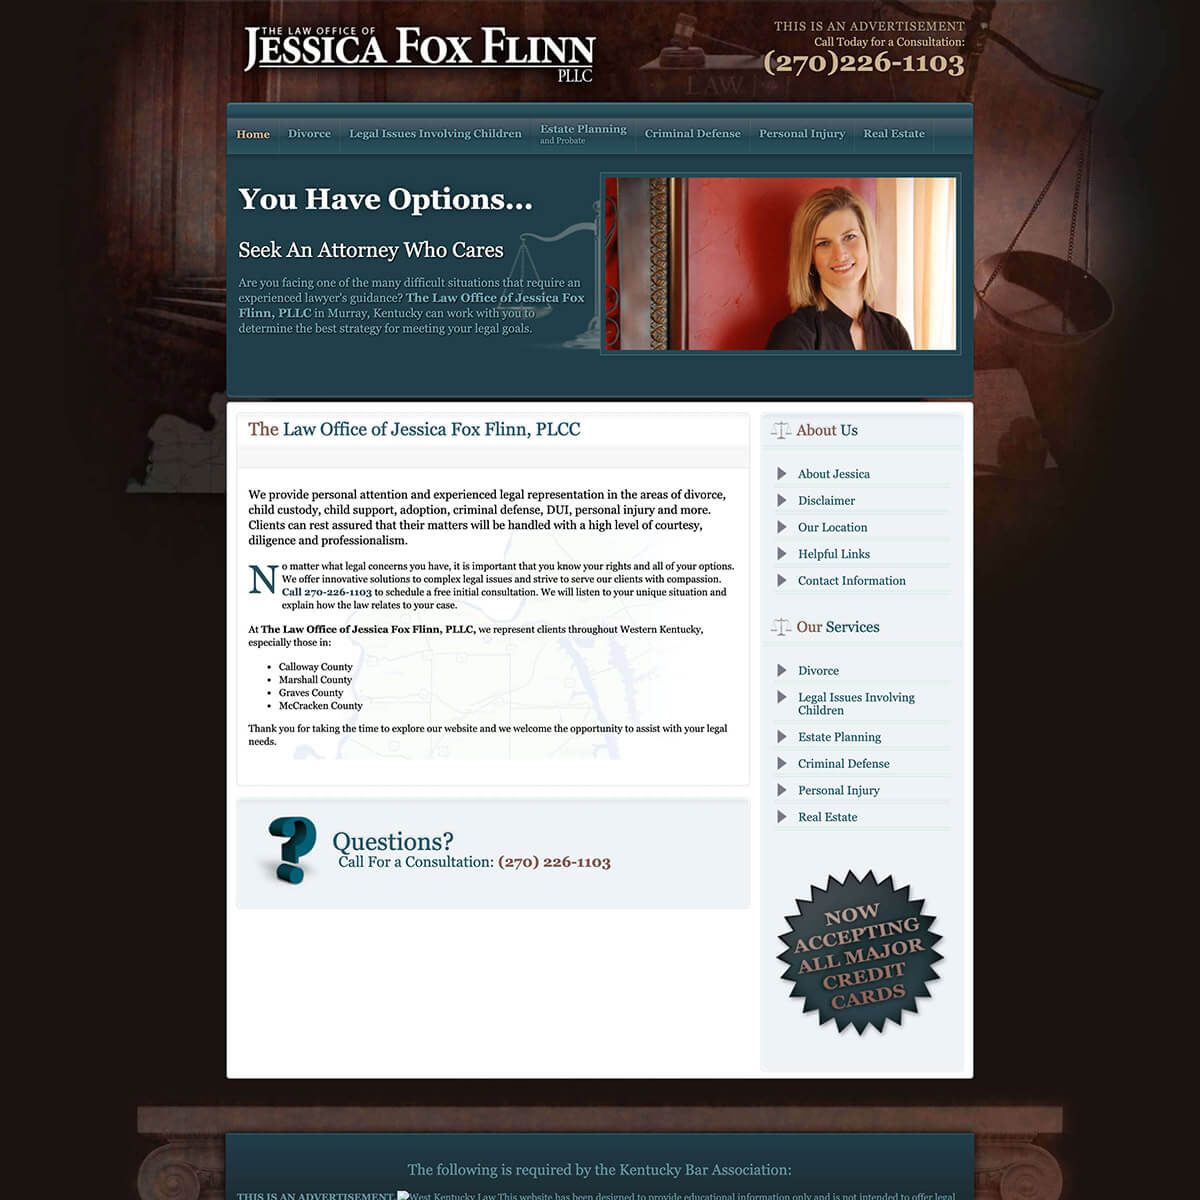 Jessica Fox Flinn web design by EyeSite Creations